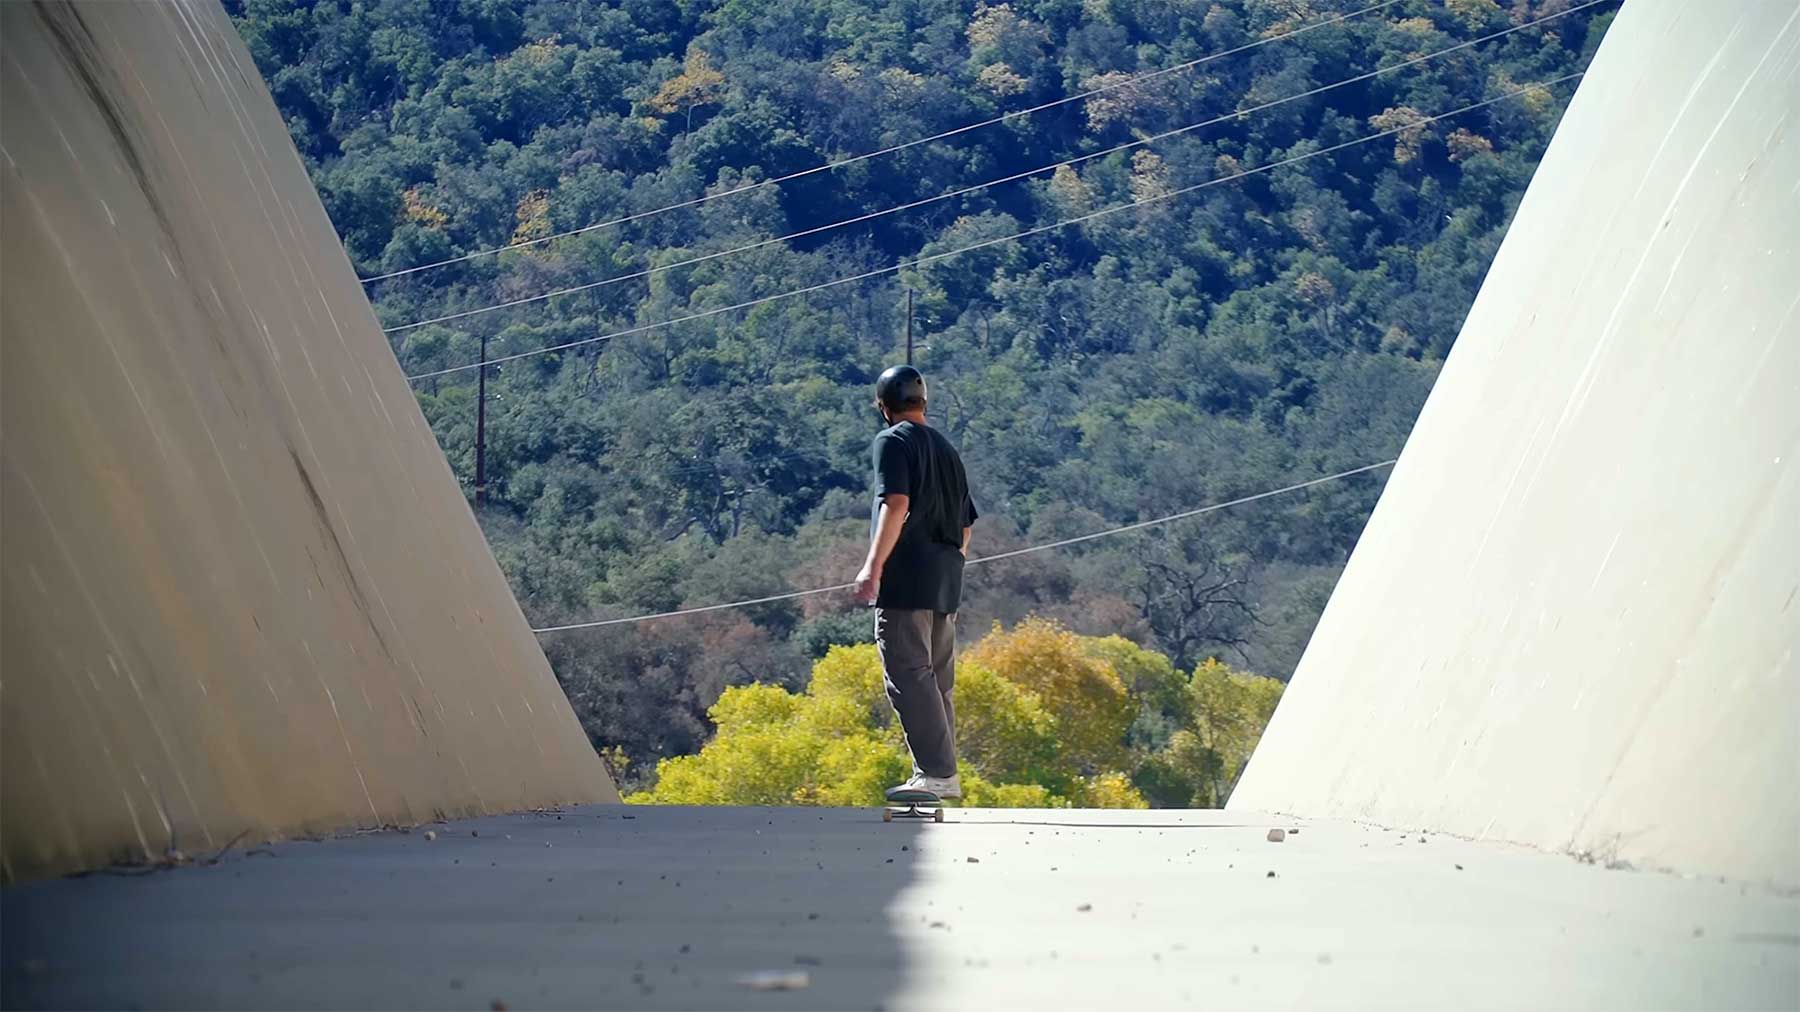 Skateboarding: Josh Dirksen - "No Idea" Josh-Dirksen-No-Idea-skateboarding 